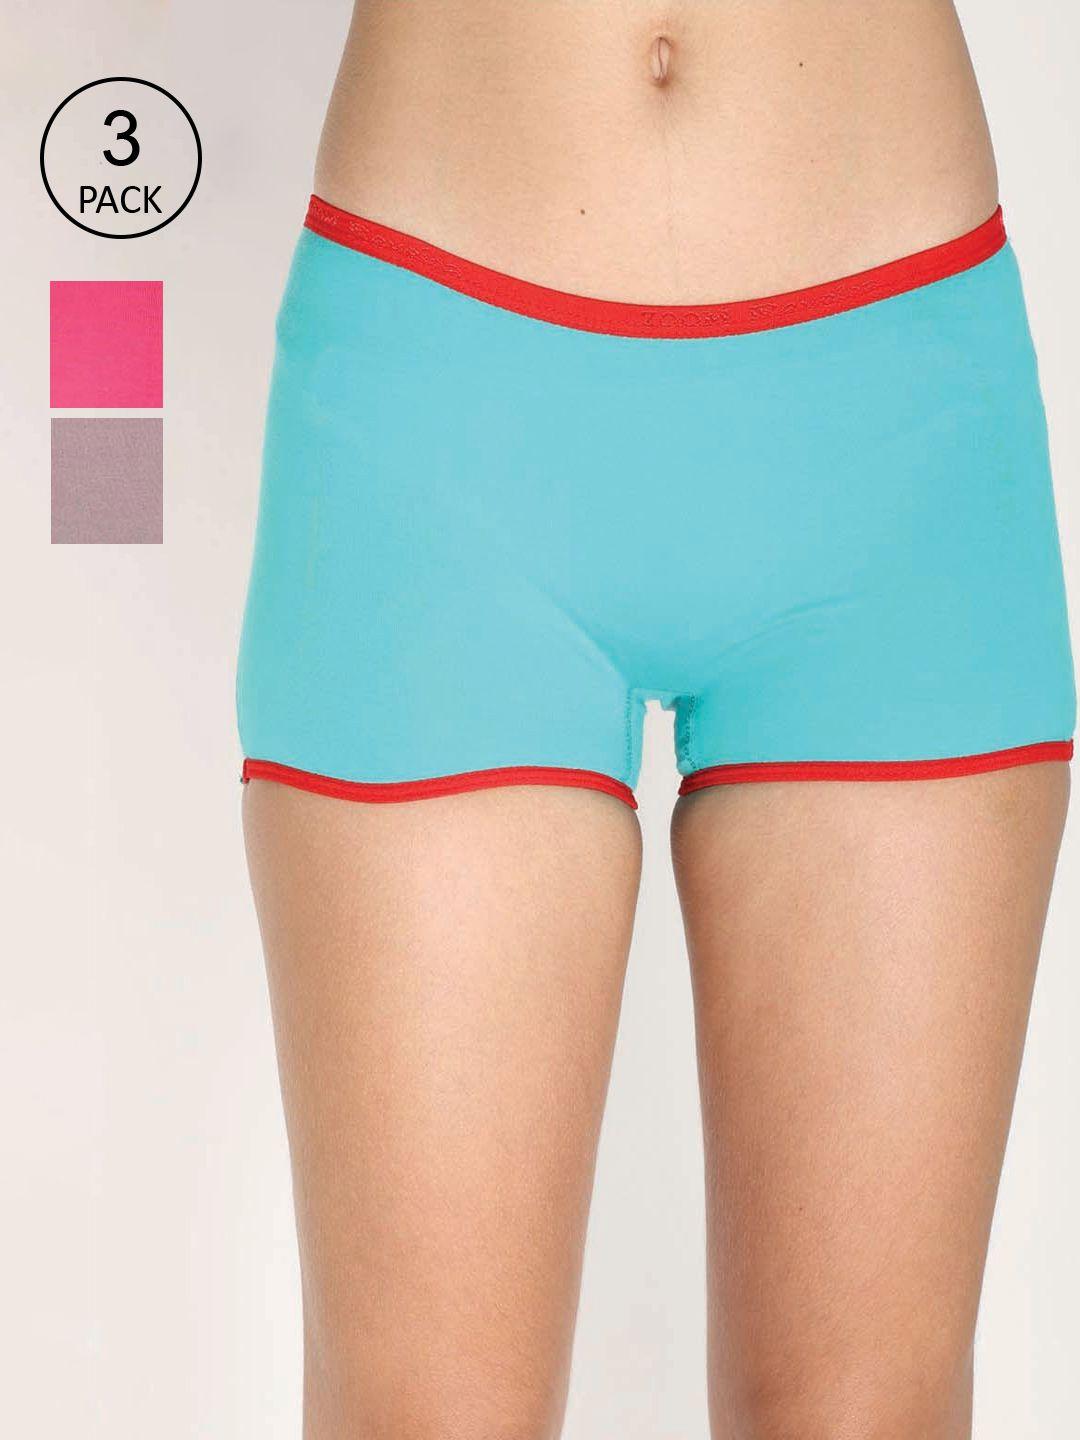 reveira women pack of 3 assorted boy shorts